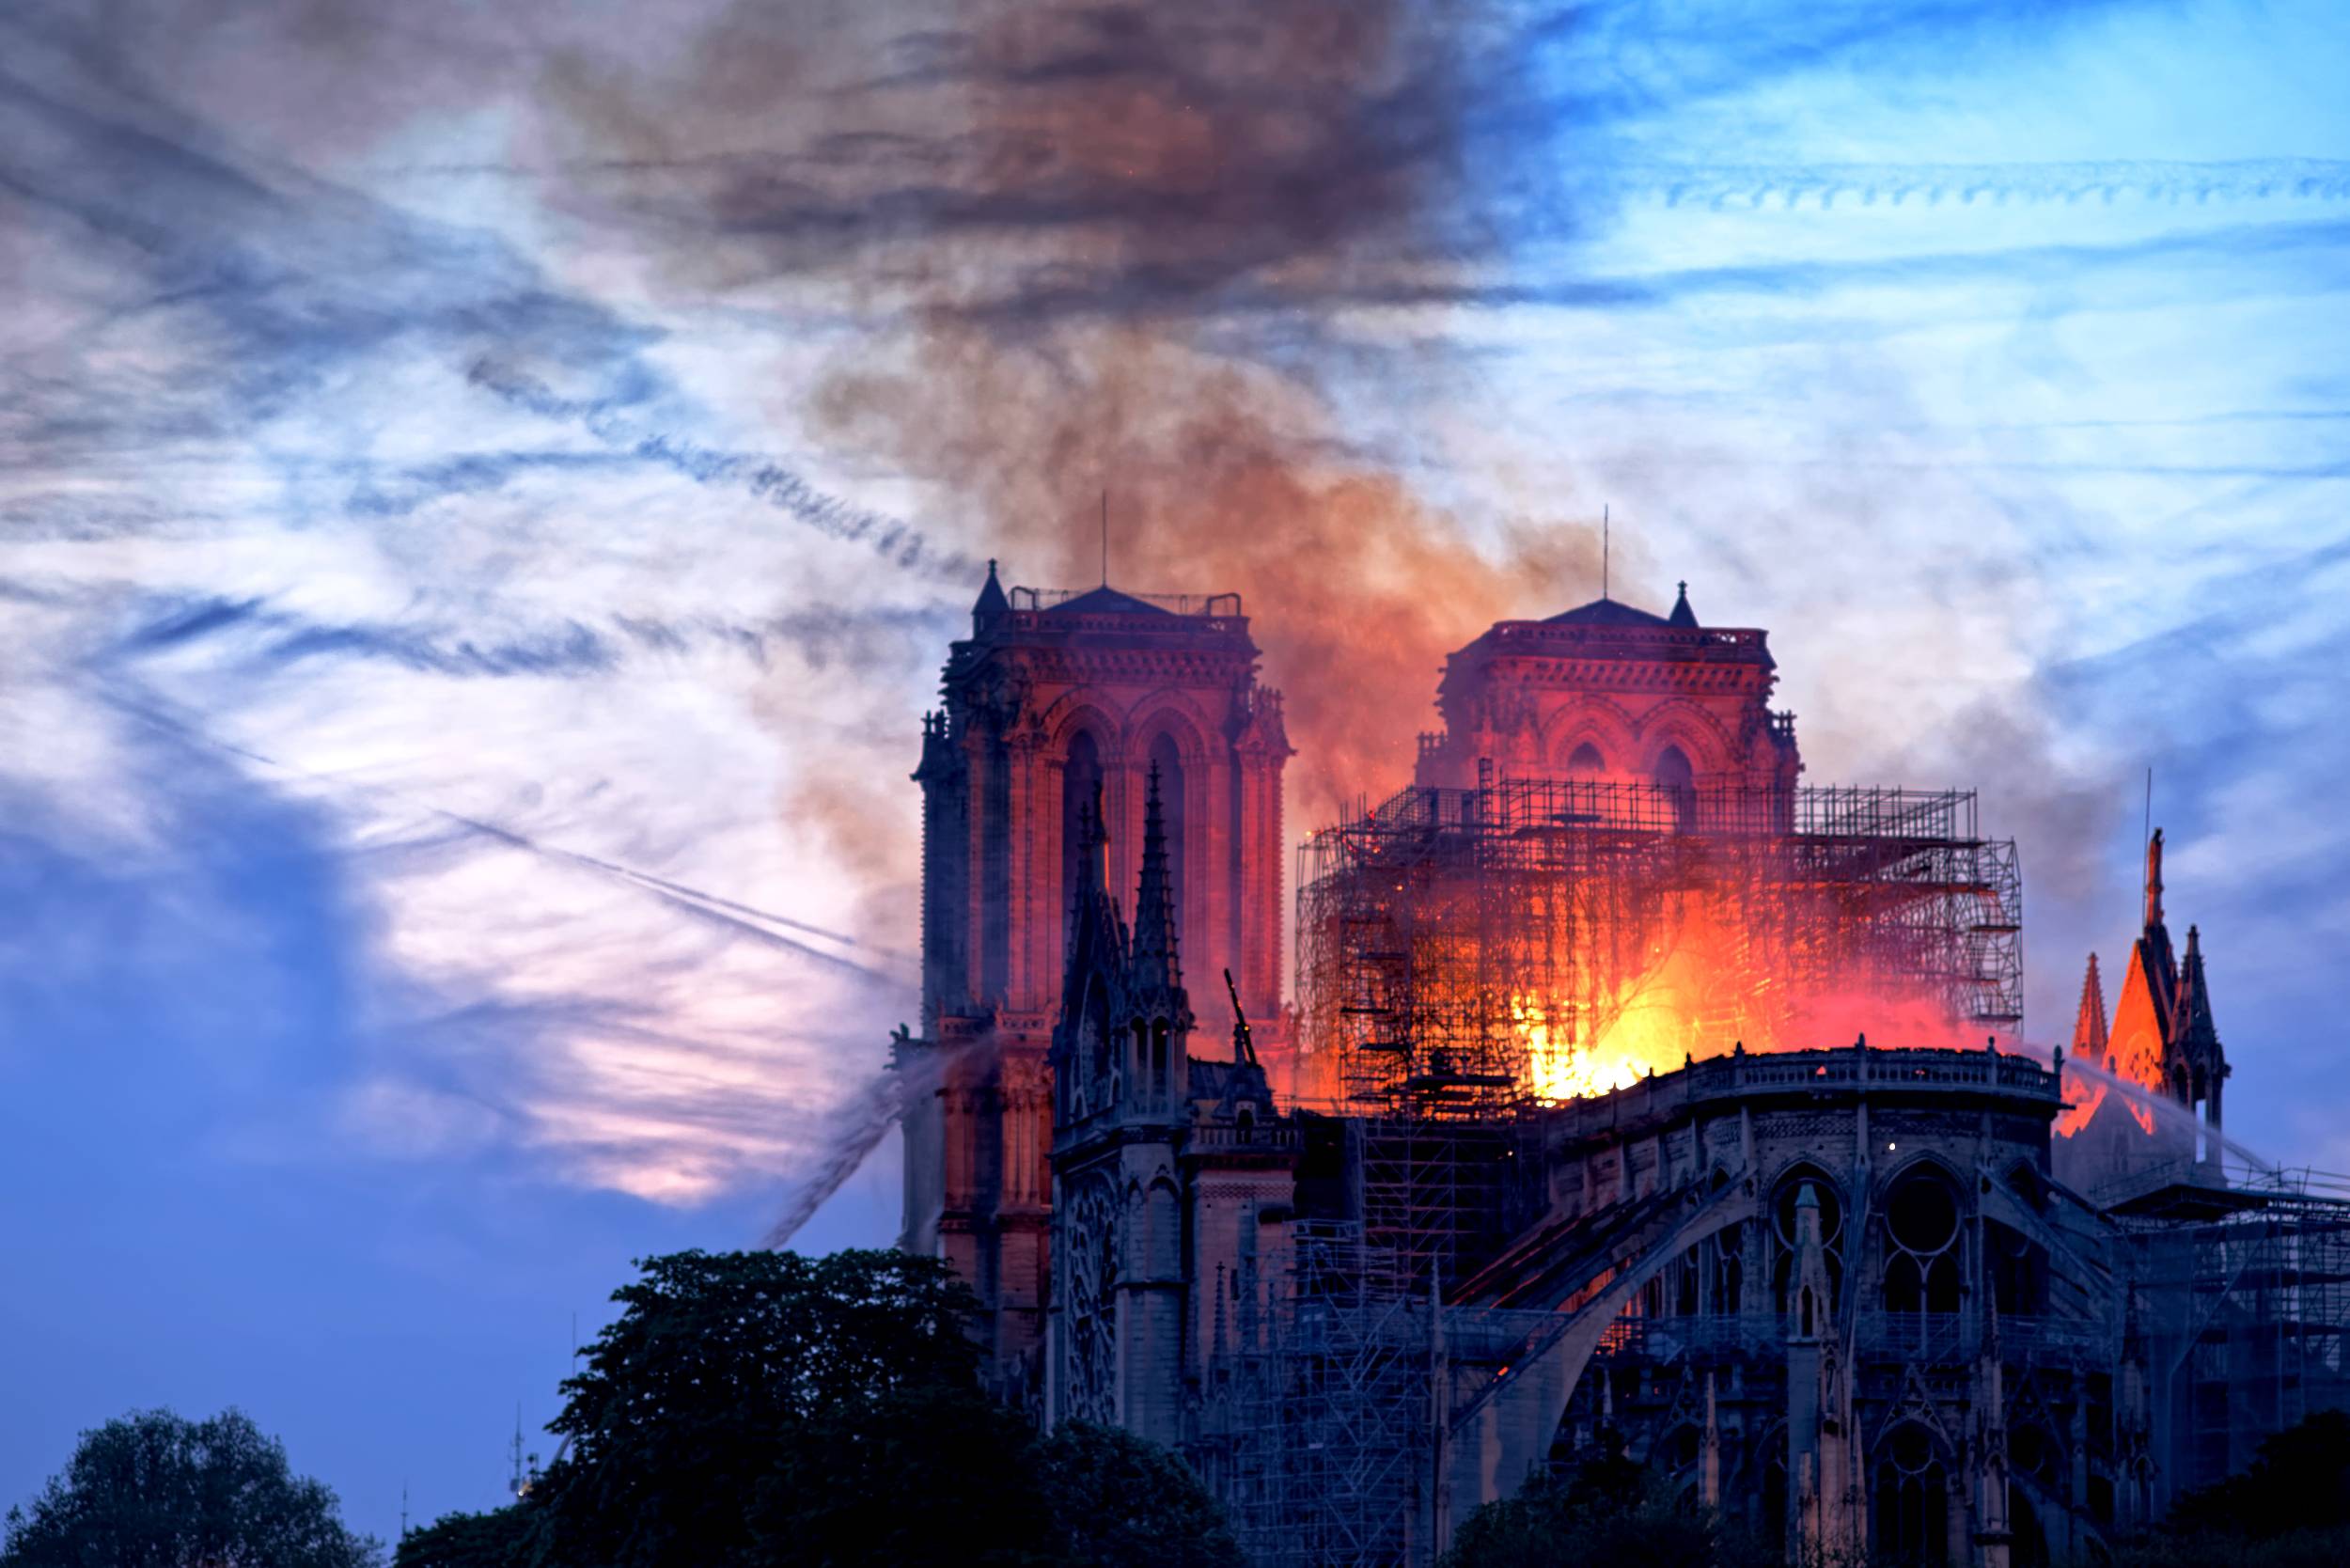 Cathedrale Notre-Dame de Paris © Olivier Mabelly